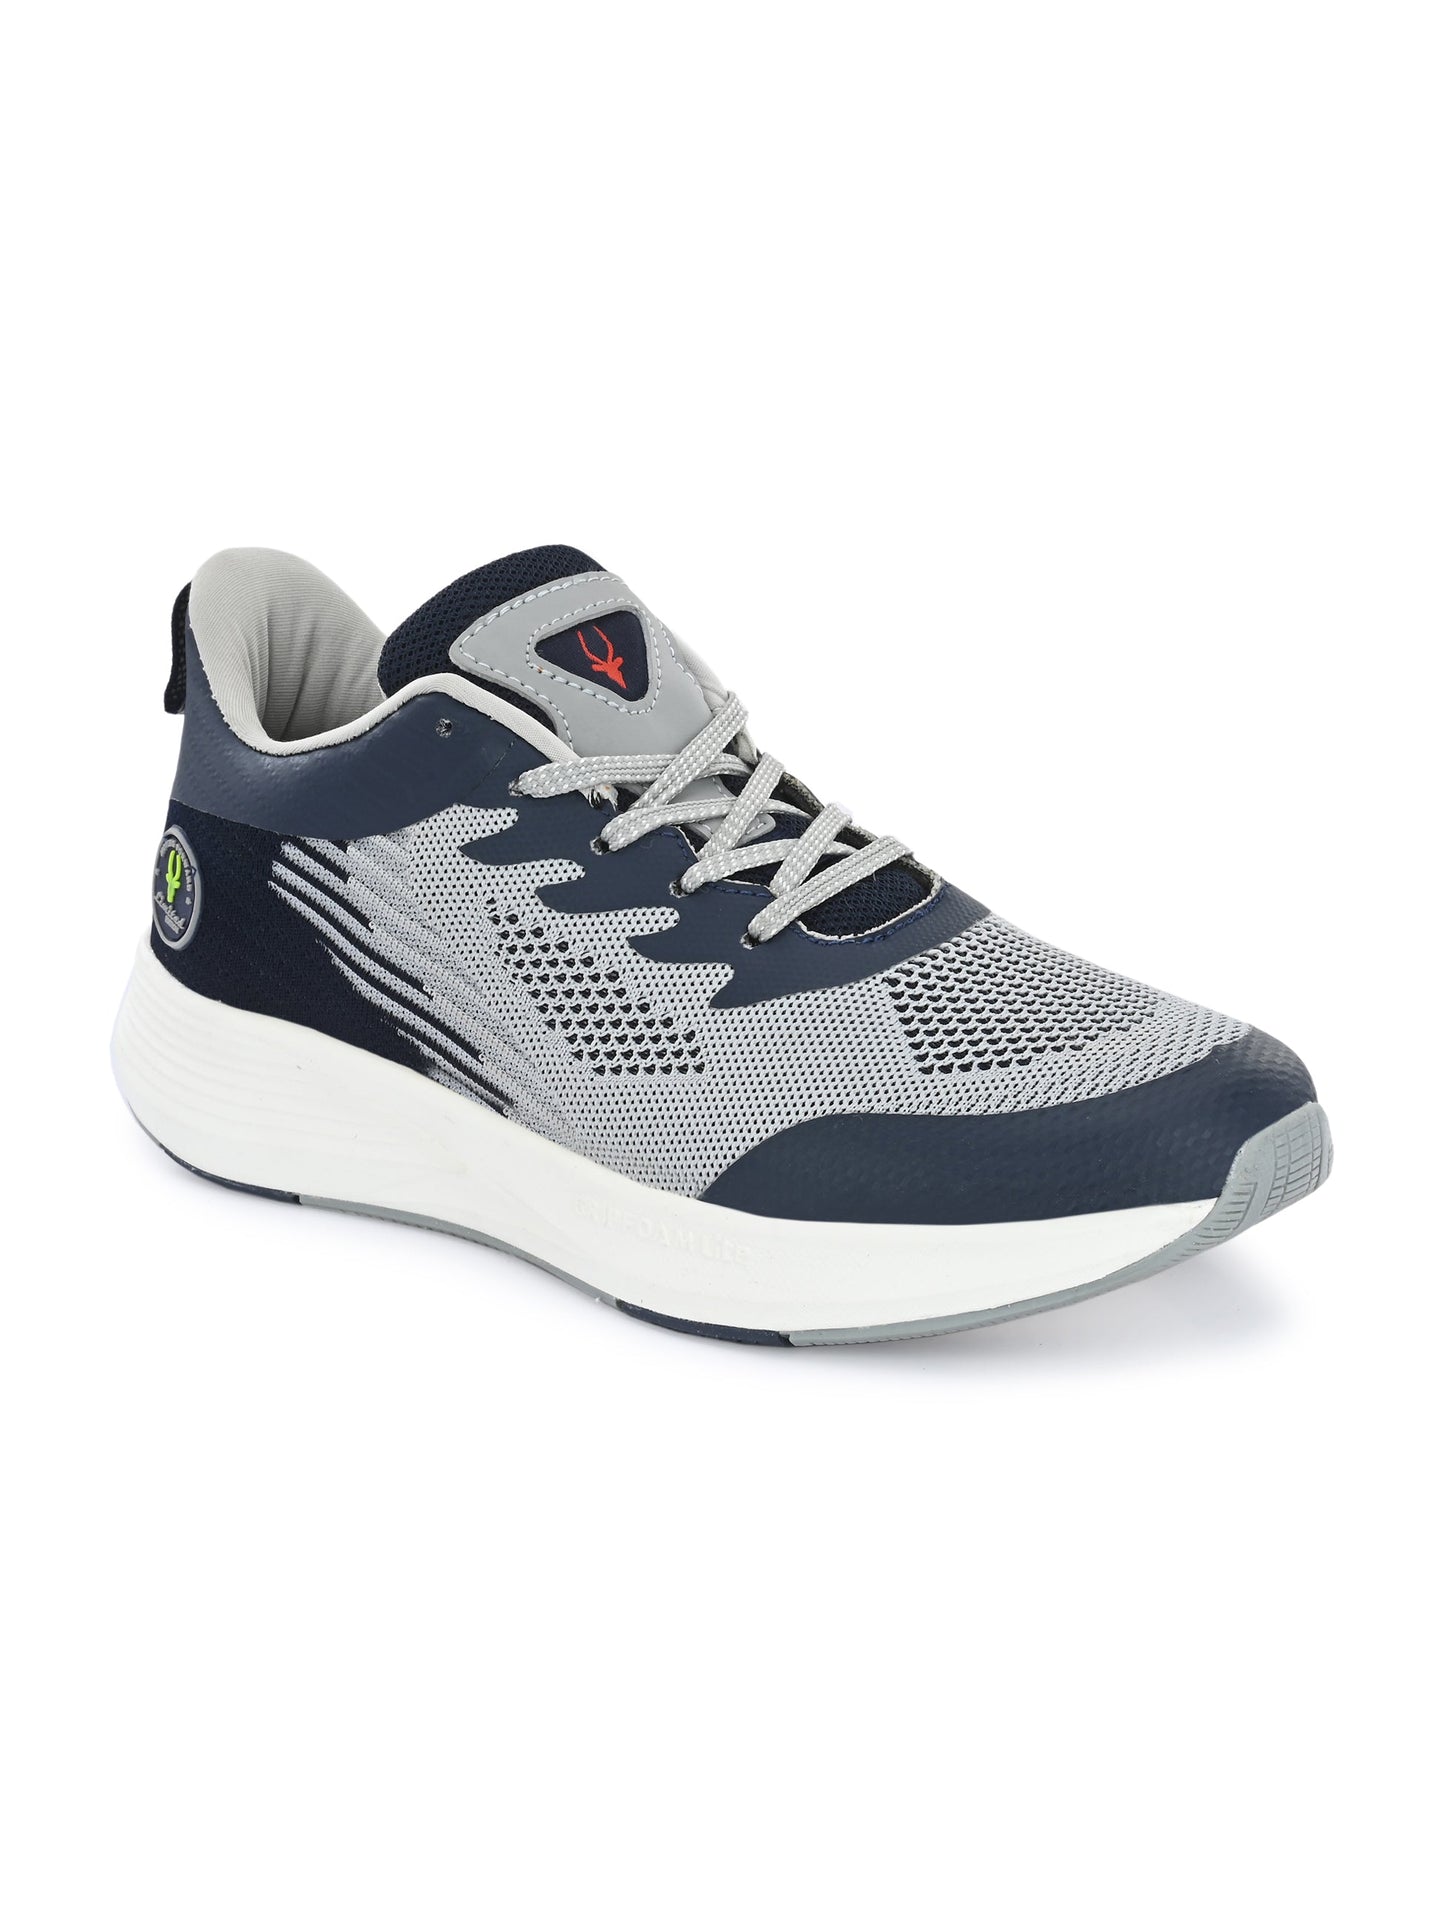 Hirolas® Men's Grey/Blue Elite Shock Absorbing Walking Running Fitness Athletic Training Gym Fashion Sneaker Sport Shoes (HRLMP01GRY)